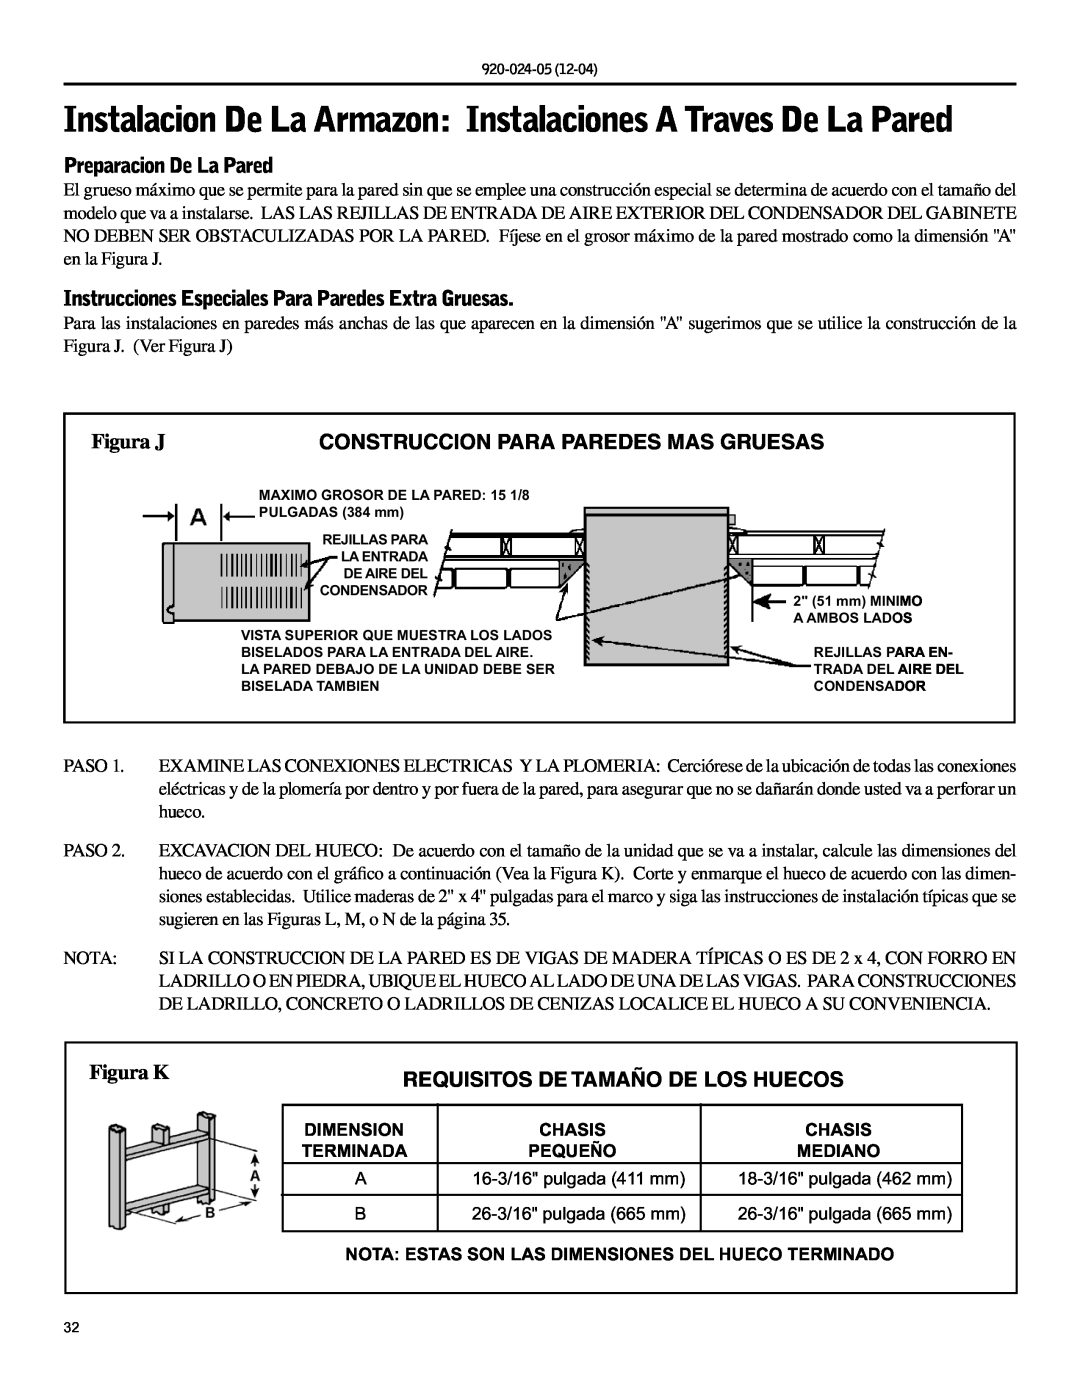 Friedrich SH15, SH20 operation manual Preparacion De La Pared, Figura J, Figura K, Requisitos De Tamaño De Los Huecos 